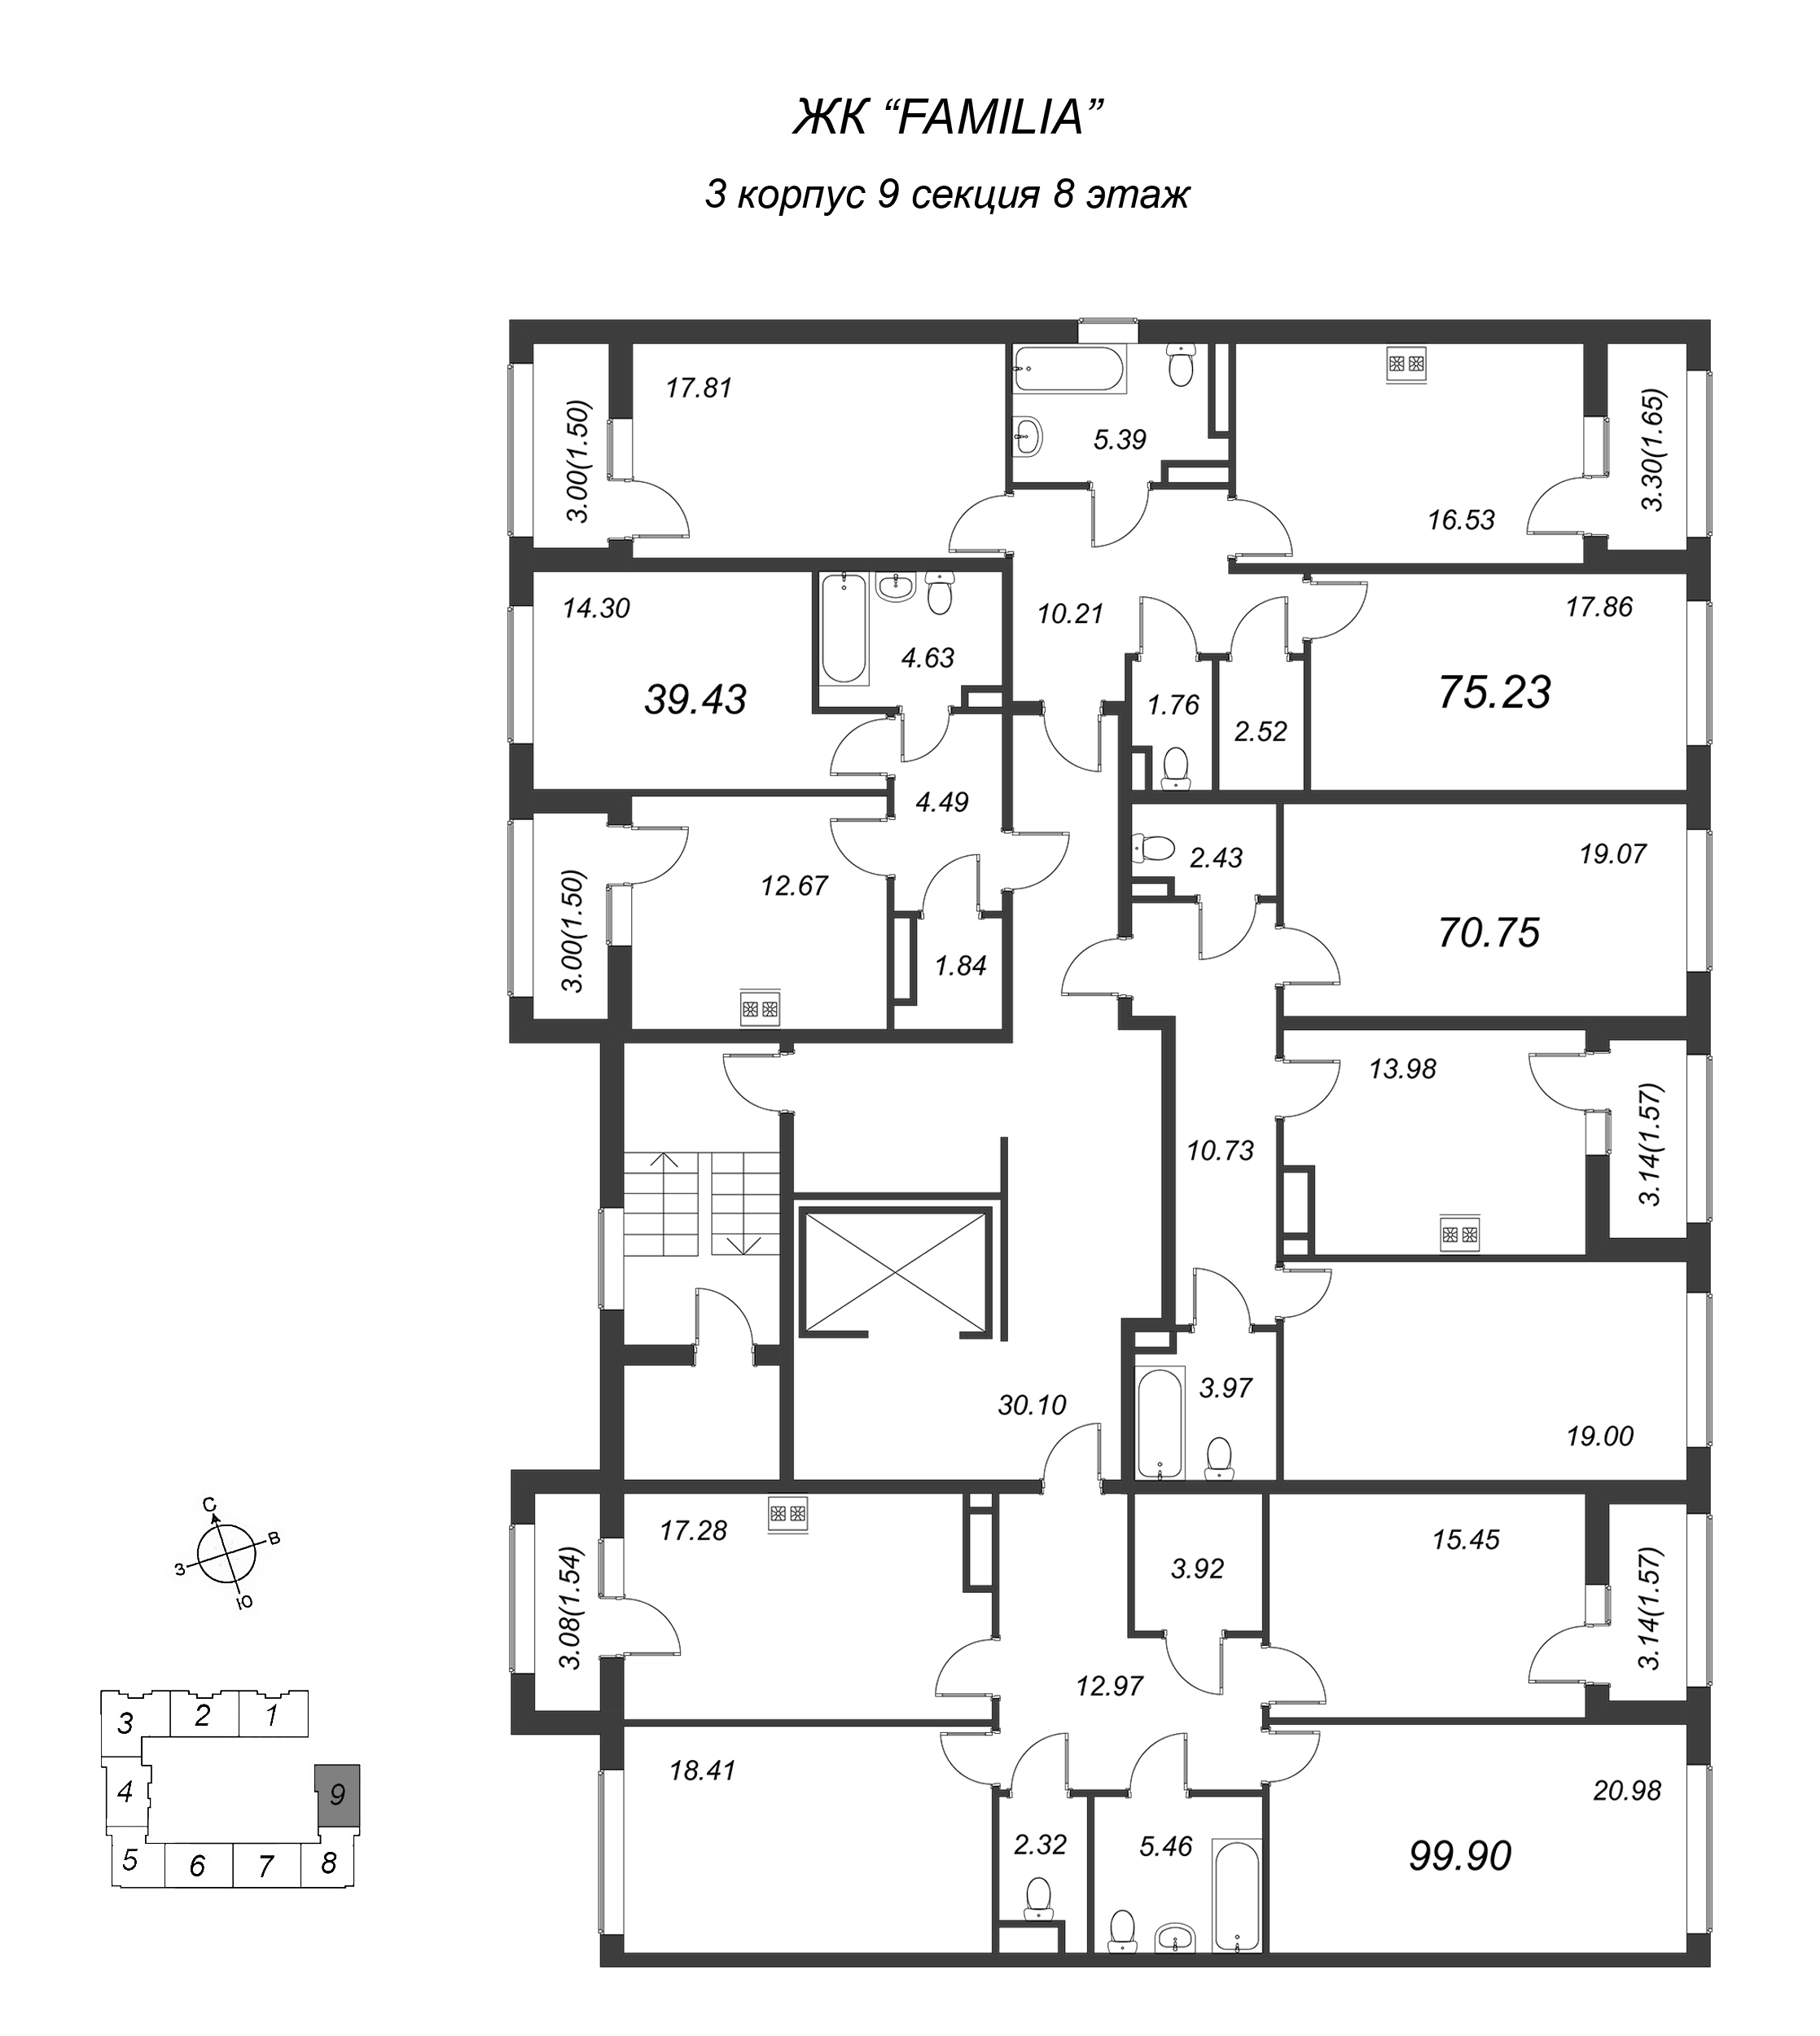 1-комнатная квартира, 39.5 м² в ЖК "FAMILIA" - планировка этажа